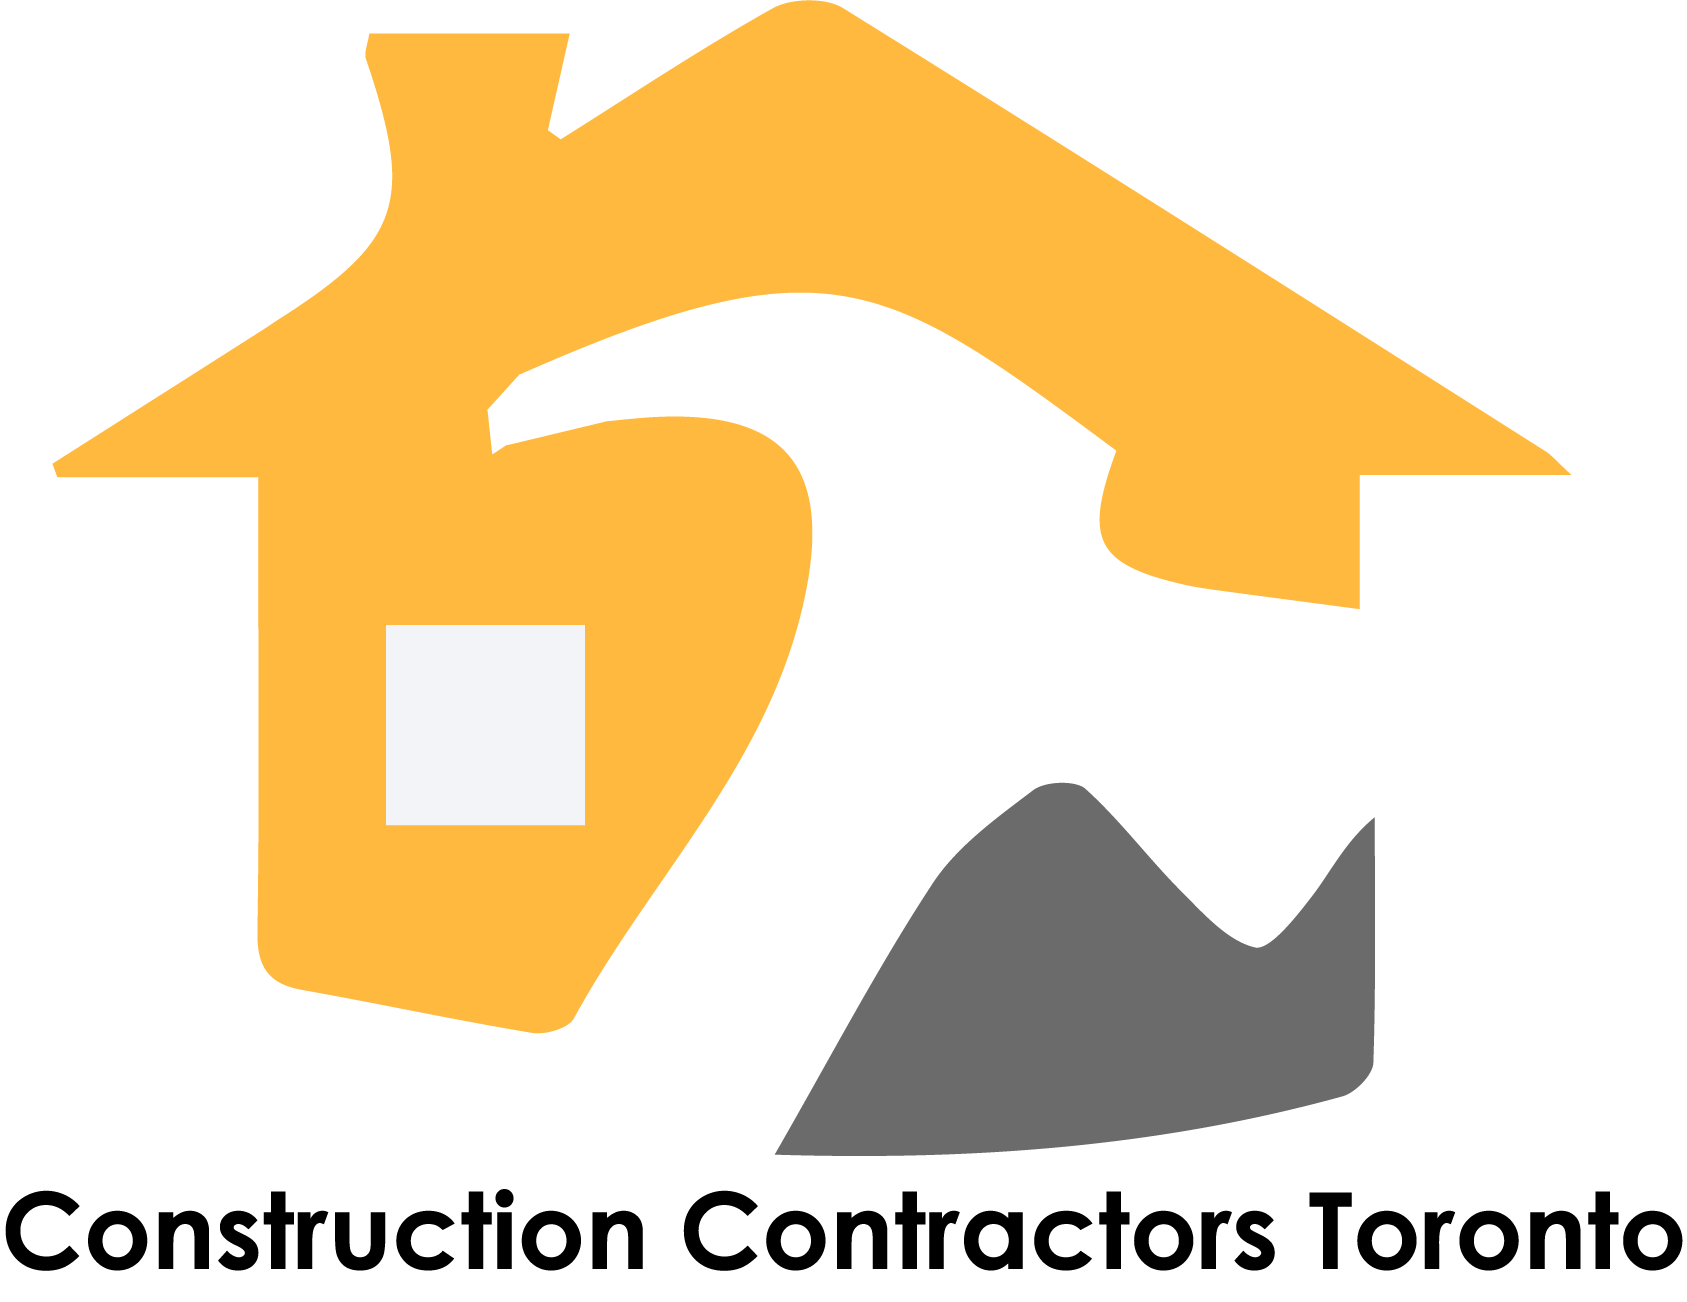 Home Renovation Toronto - Certified Professional GTA Contractor